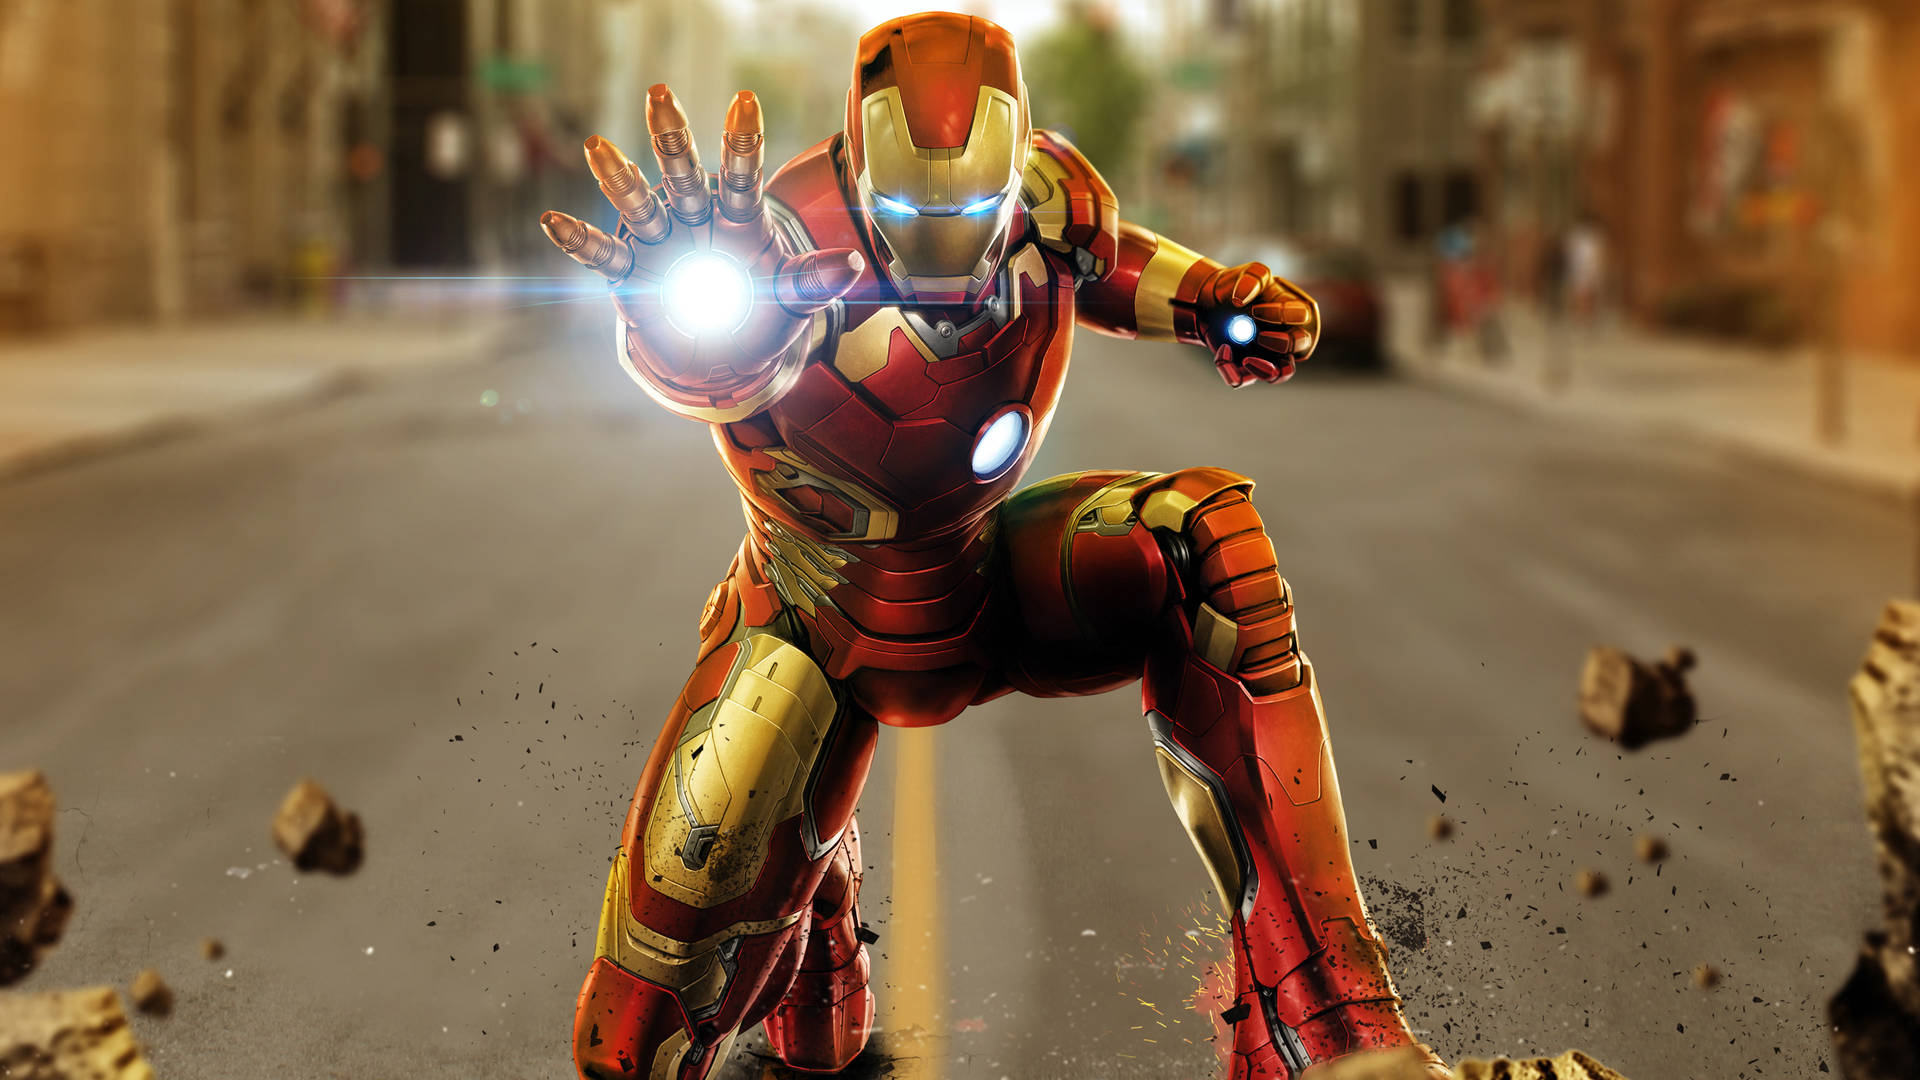 Cool Iron Man Repulsor Blast Wallpaper